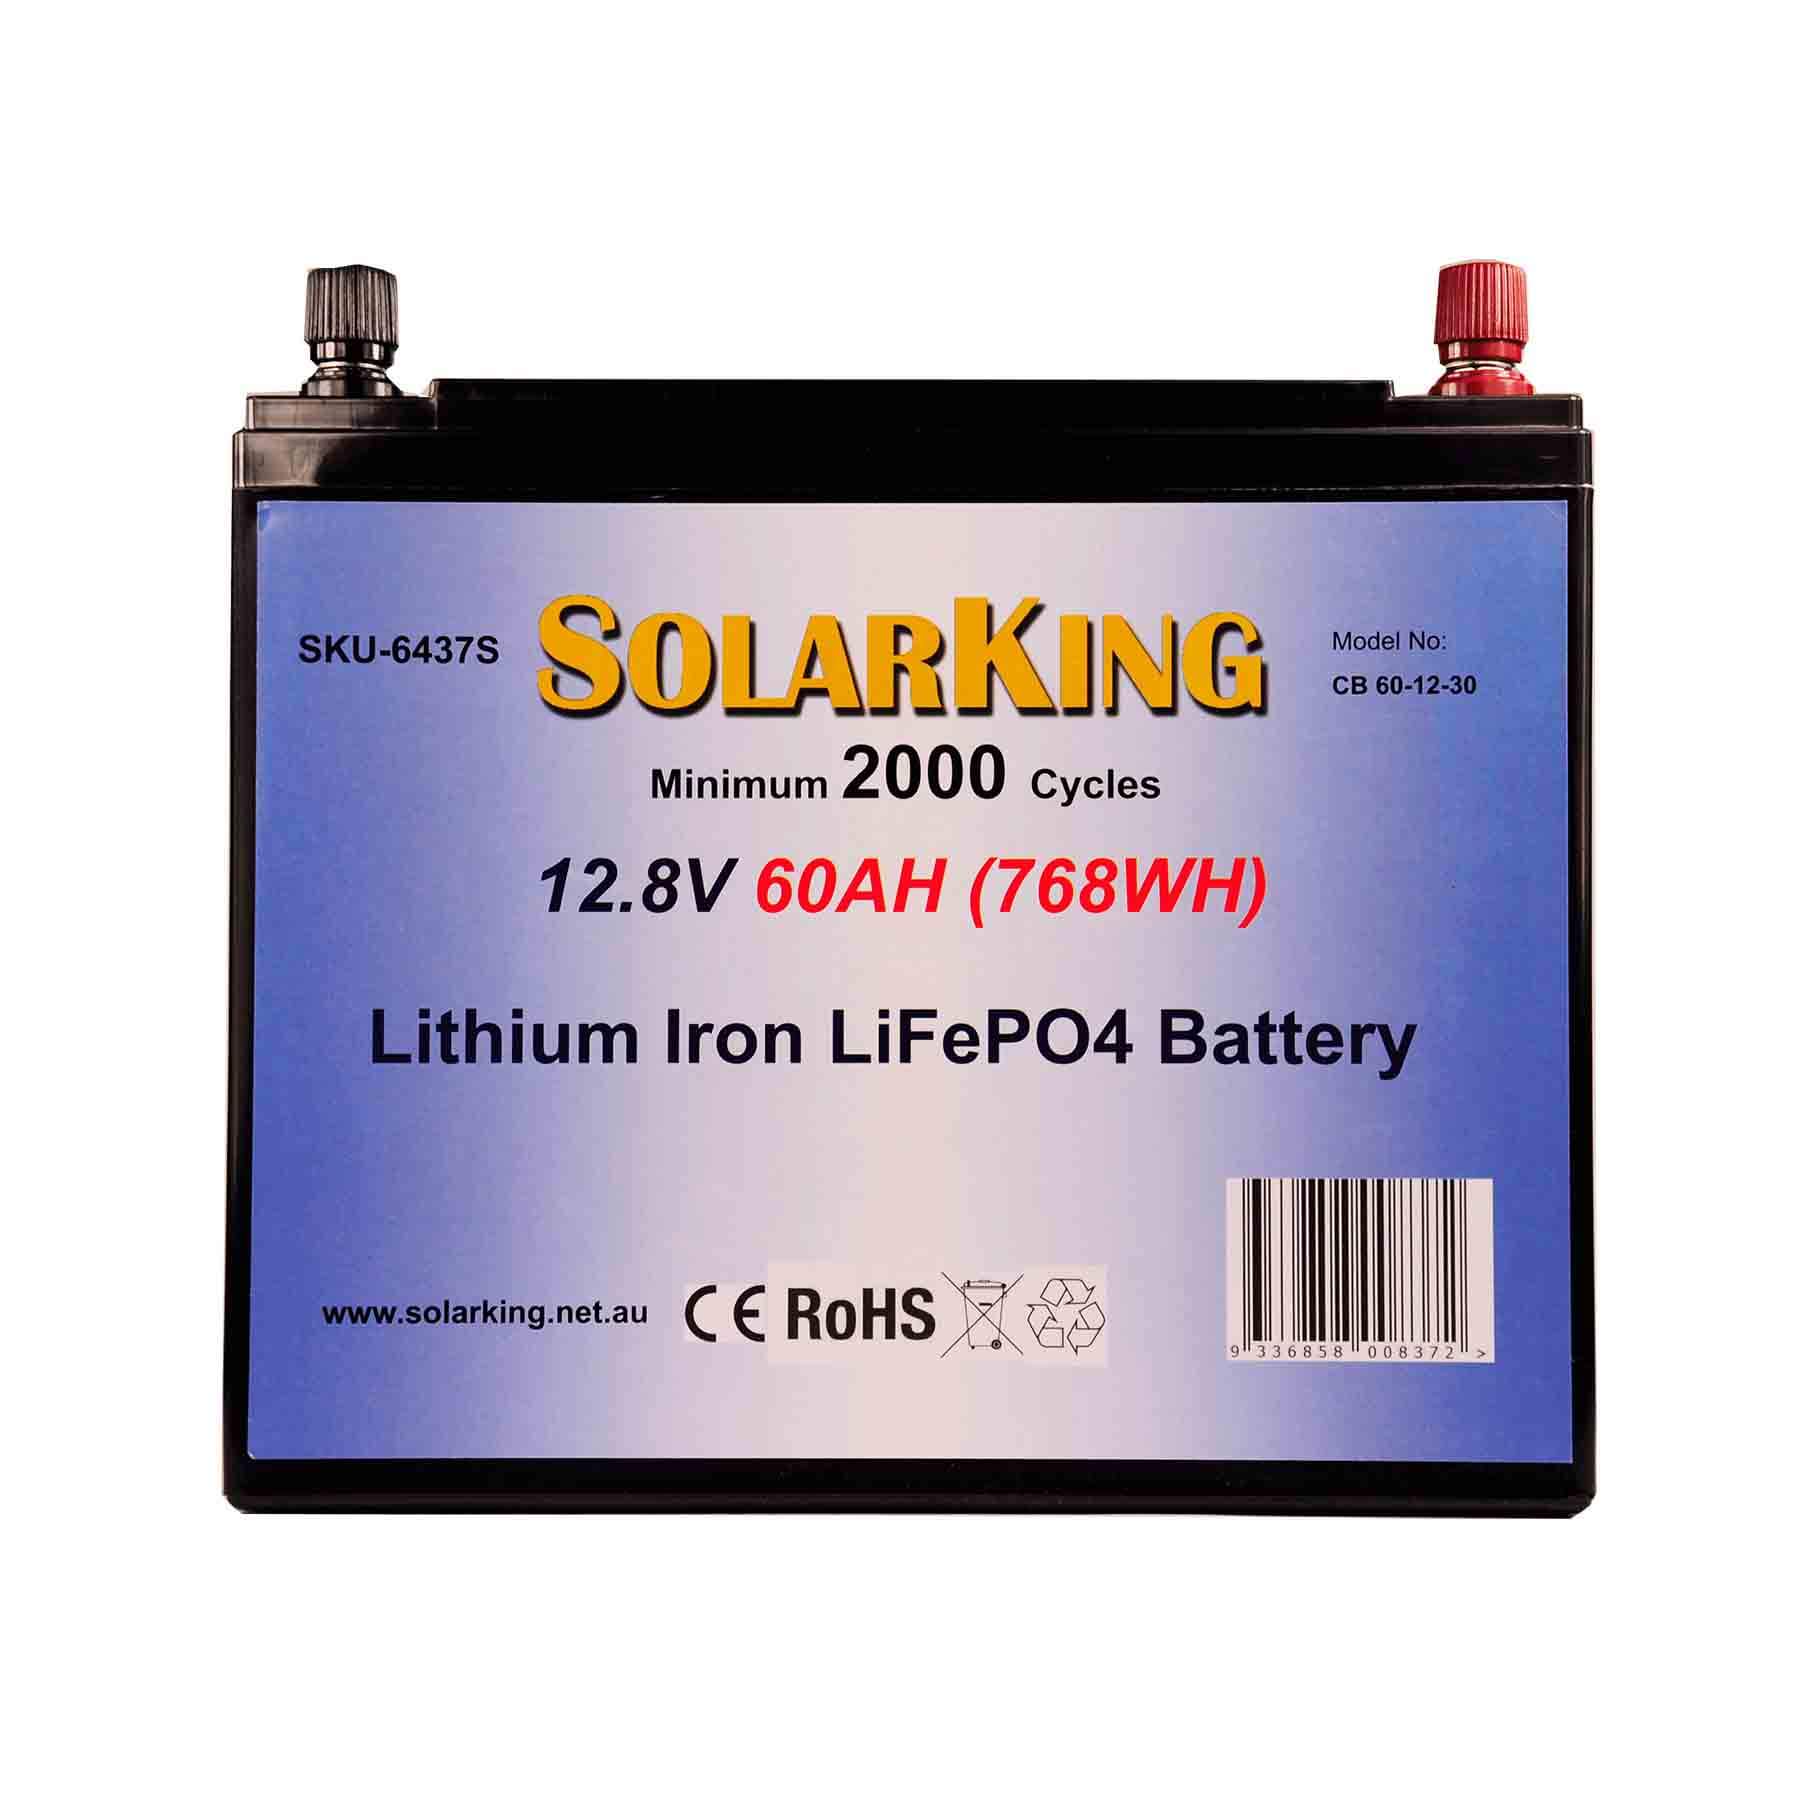 60AH Lithium Iron SolarKing Battery CB-60-12-30